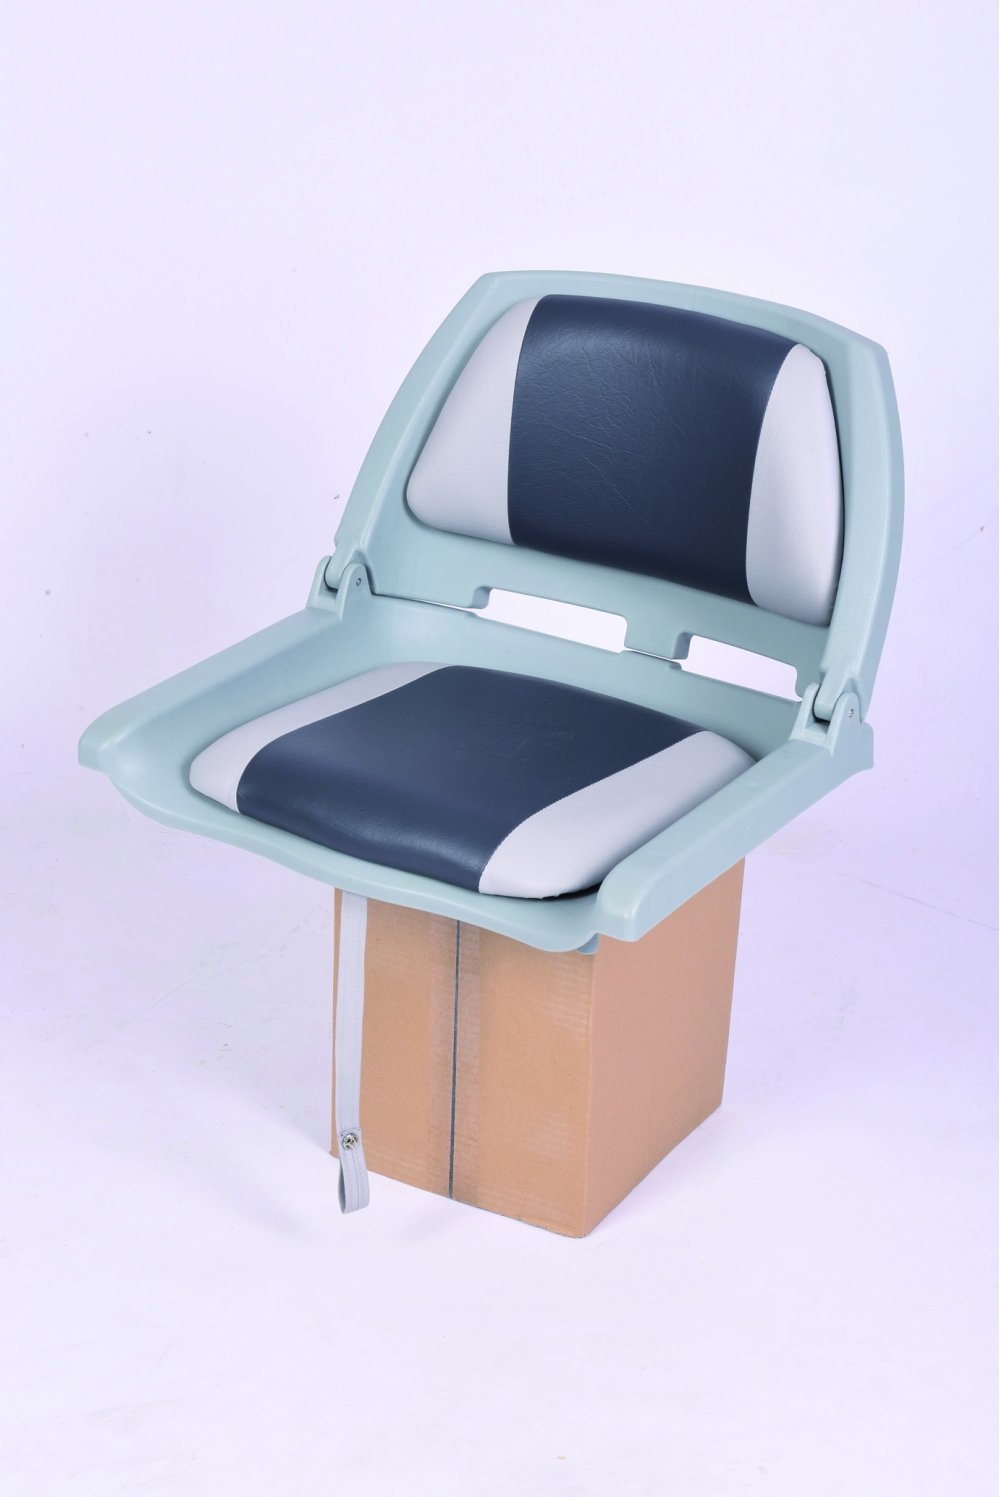 Talamex Folding Boat Seat Plastic Shell With Soft Padding